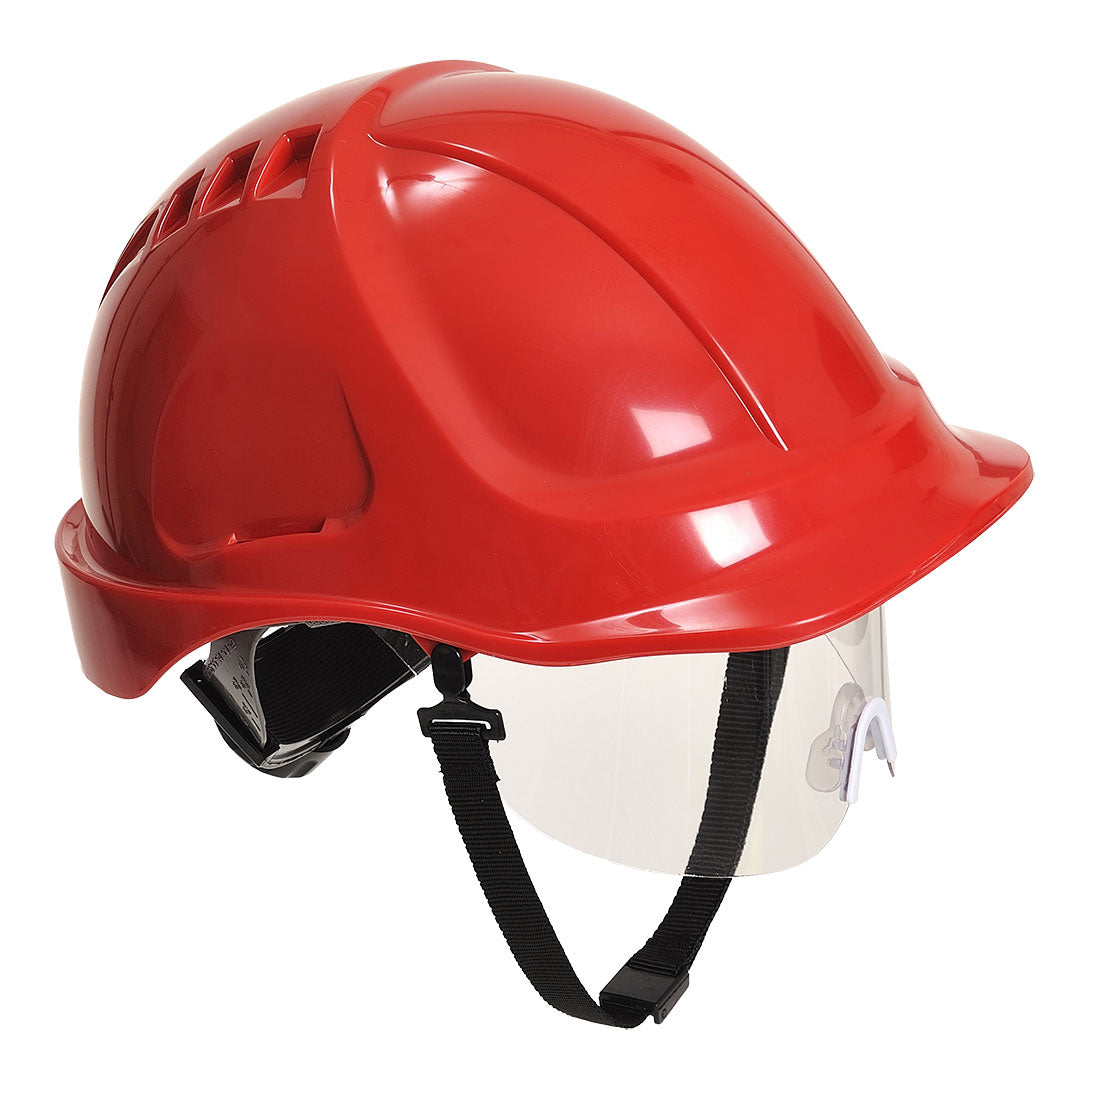 Portwest PW54 Endurance Plus Visor Helmet - Red